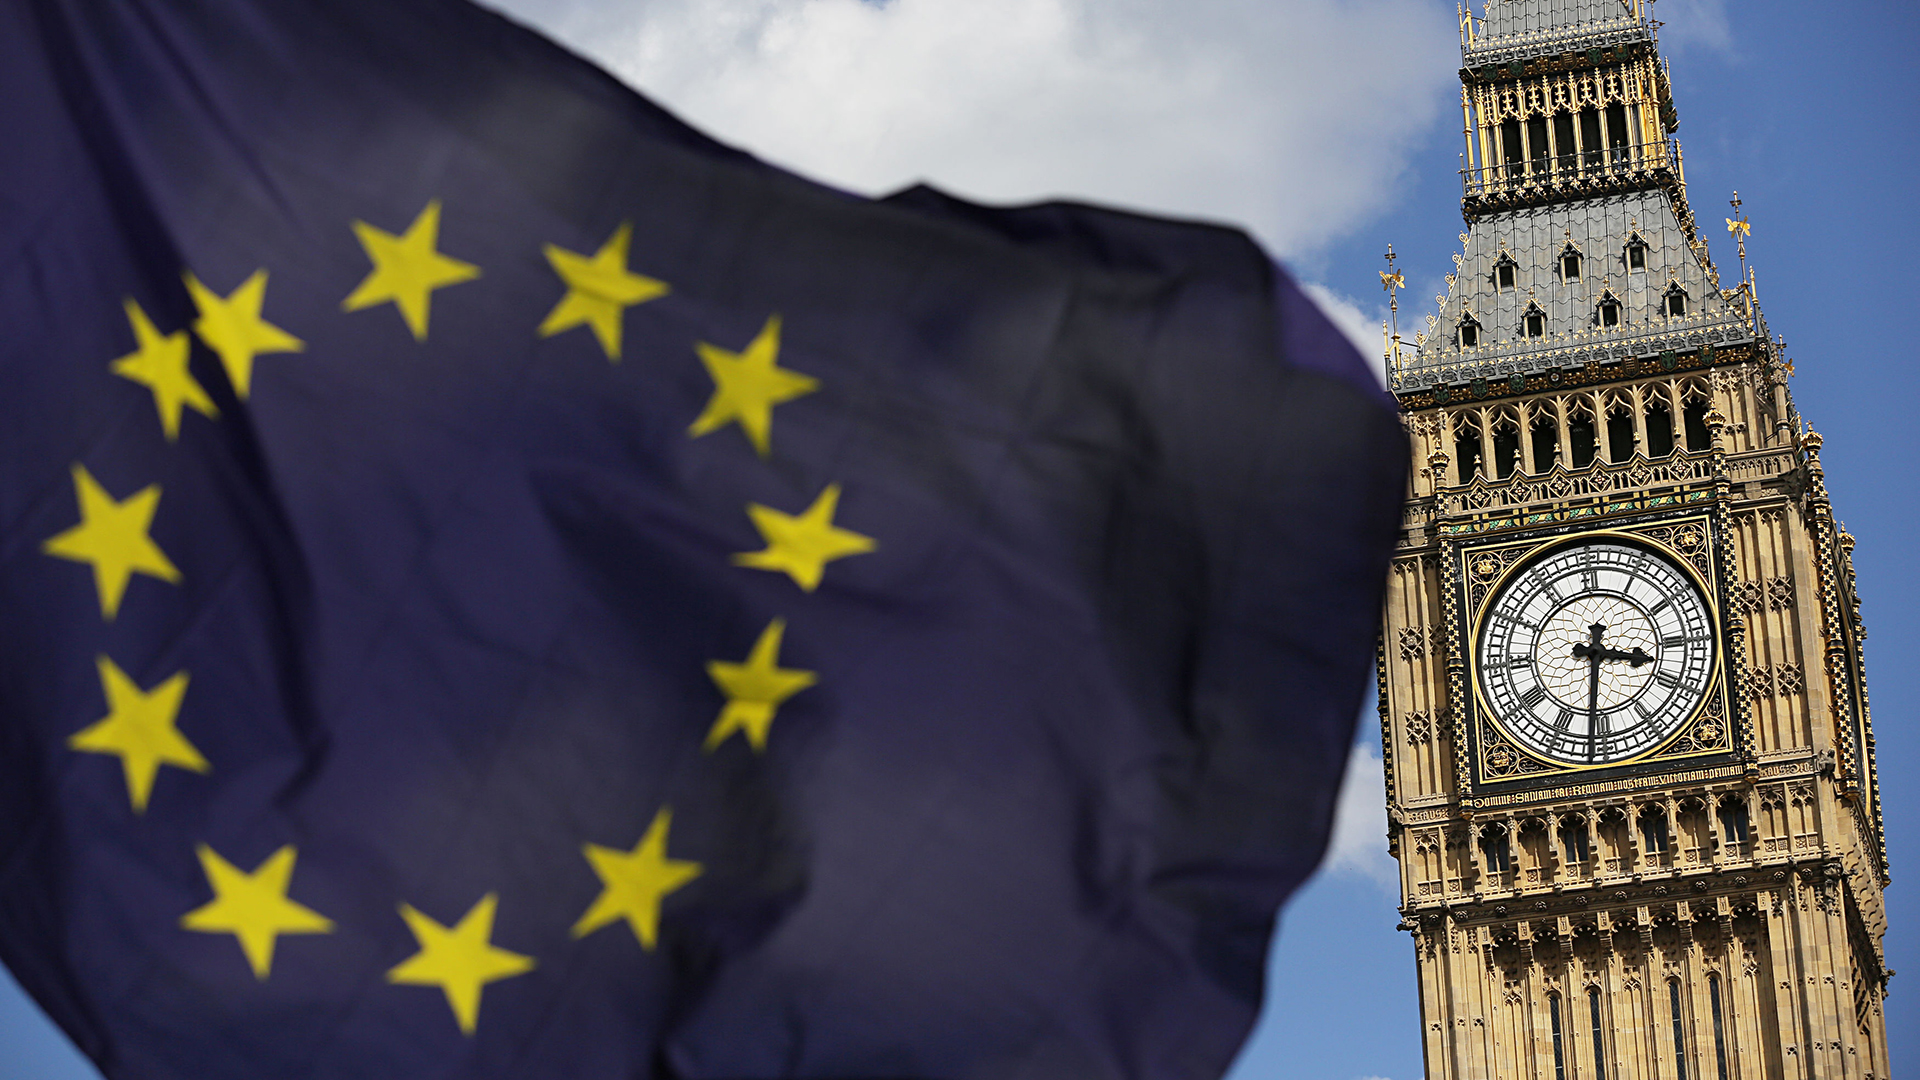 EU-Flagge weht vor dem Big Ben in London